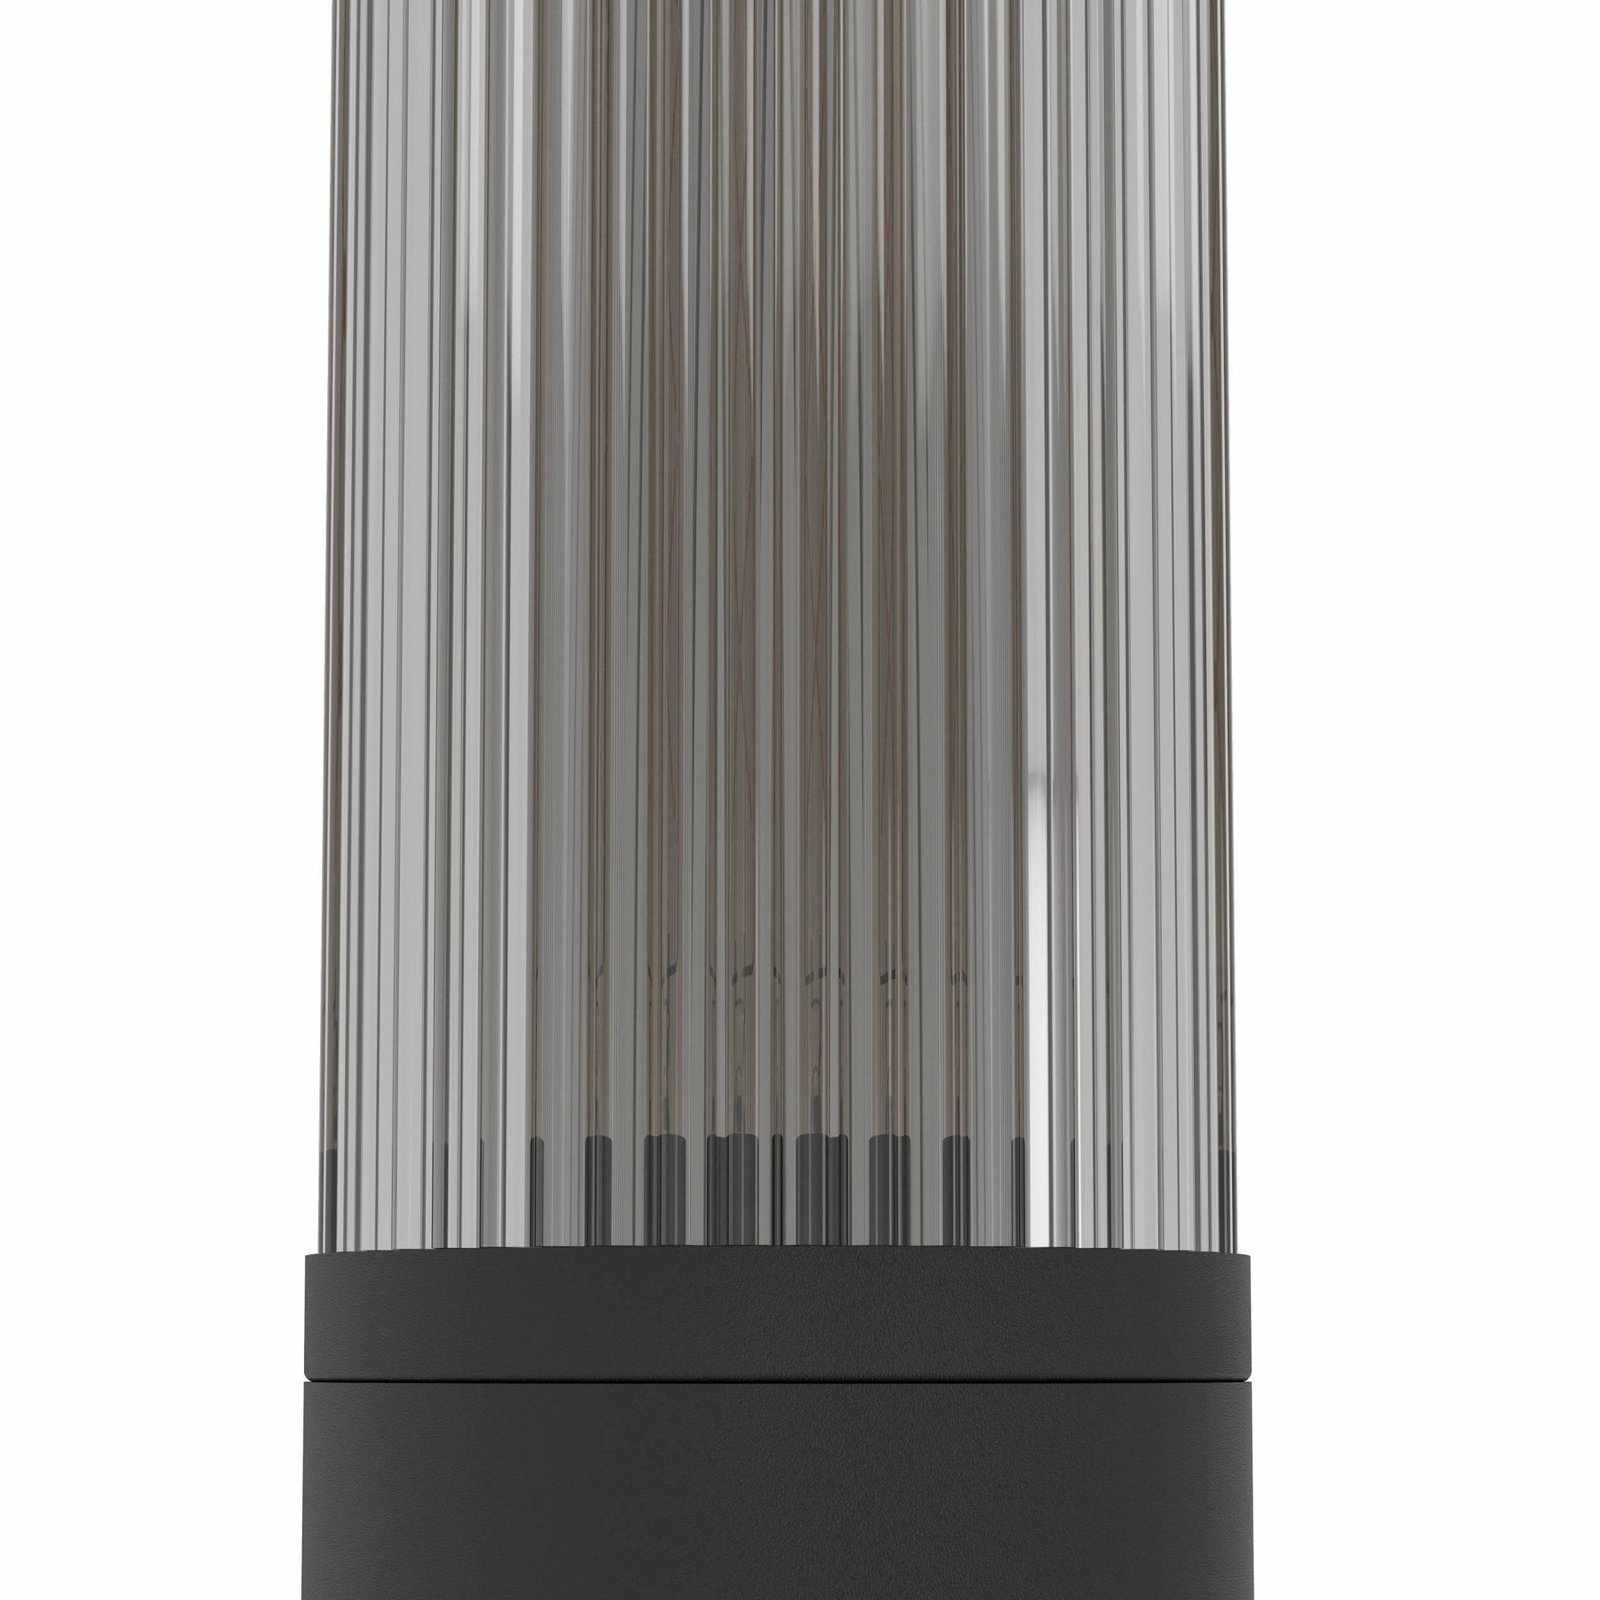 Sokkellamp Salle, hoogte 46,5 cm, zwart, aluminium